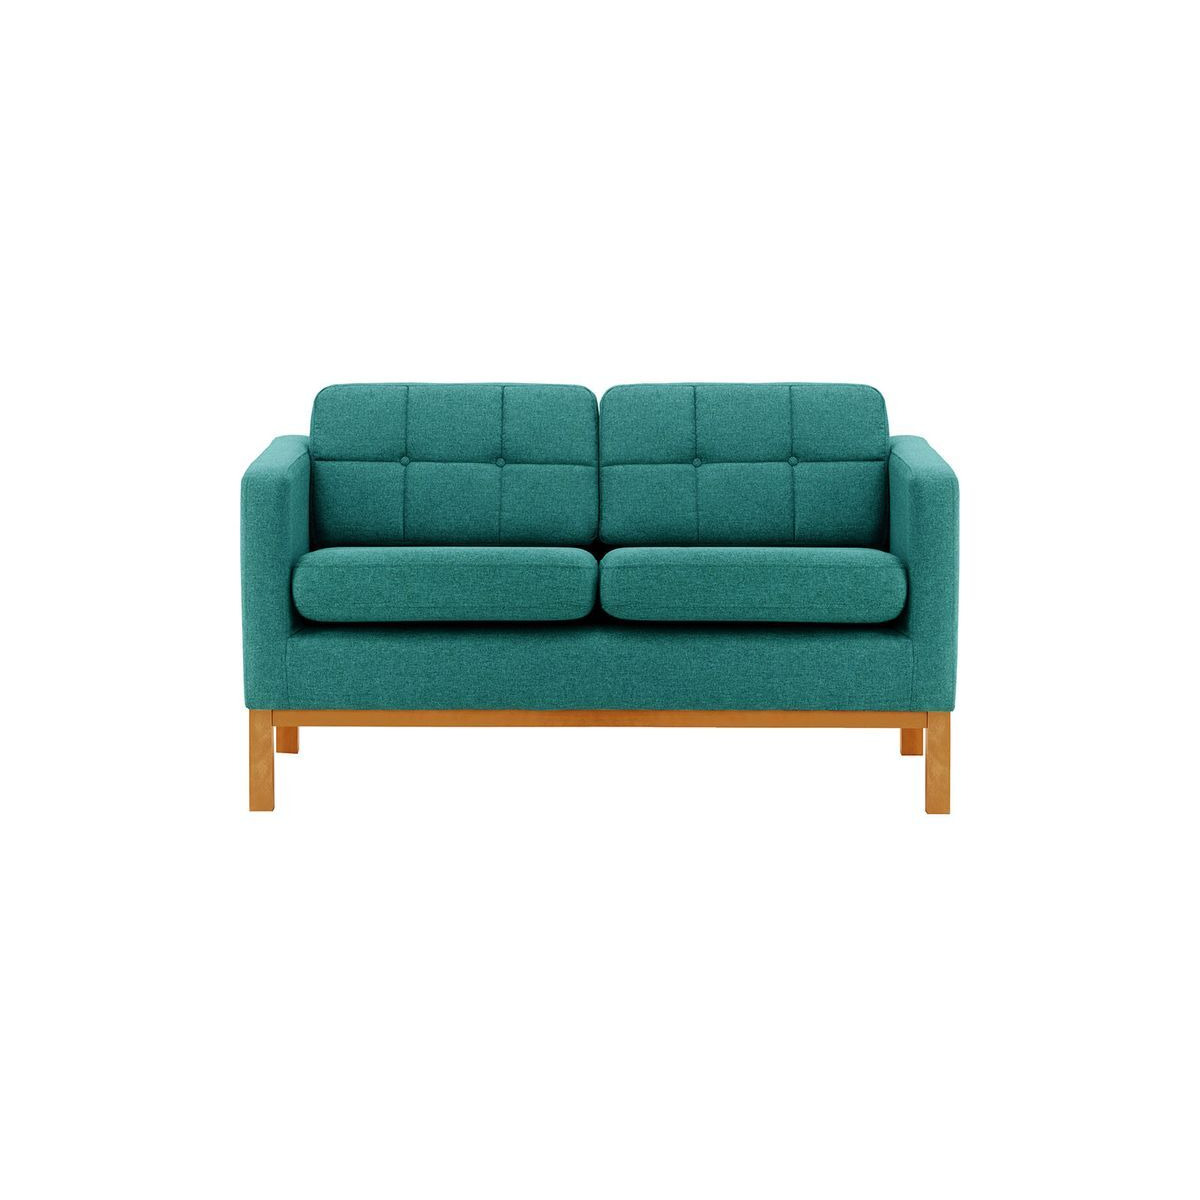 Normann 2 Seater Sofa, turquoise, Leg colour: aveo - image 1